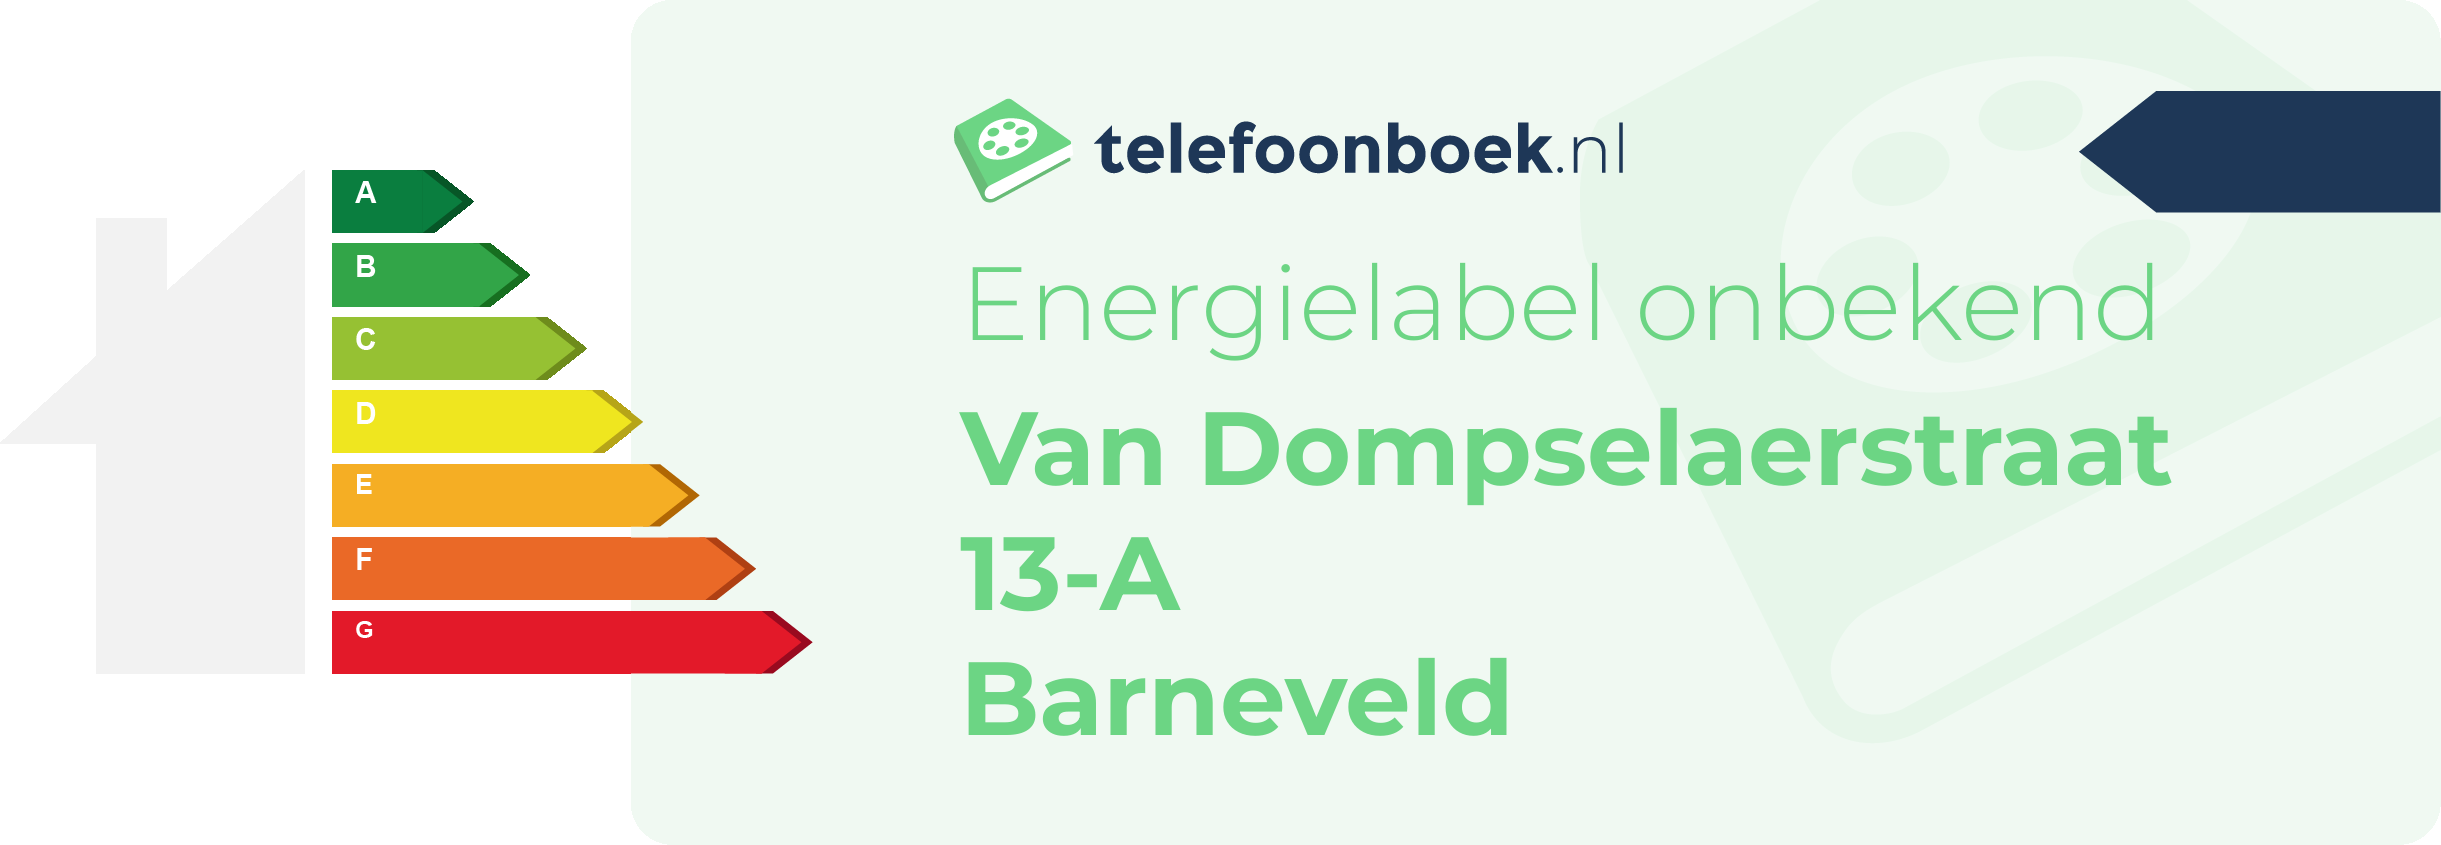 Energielabel Van Dompselaerstraat 13-A Barneveld